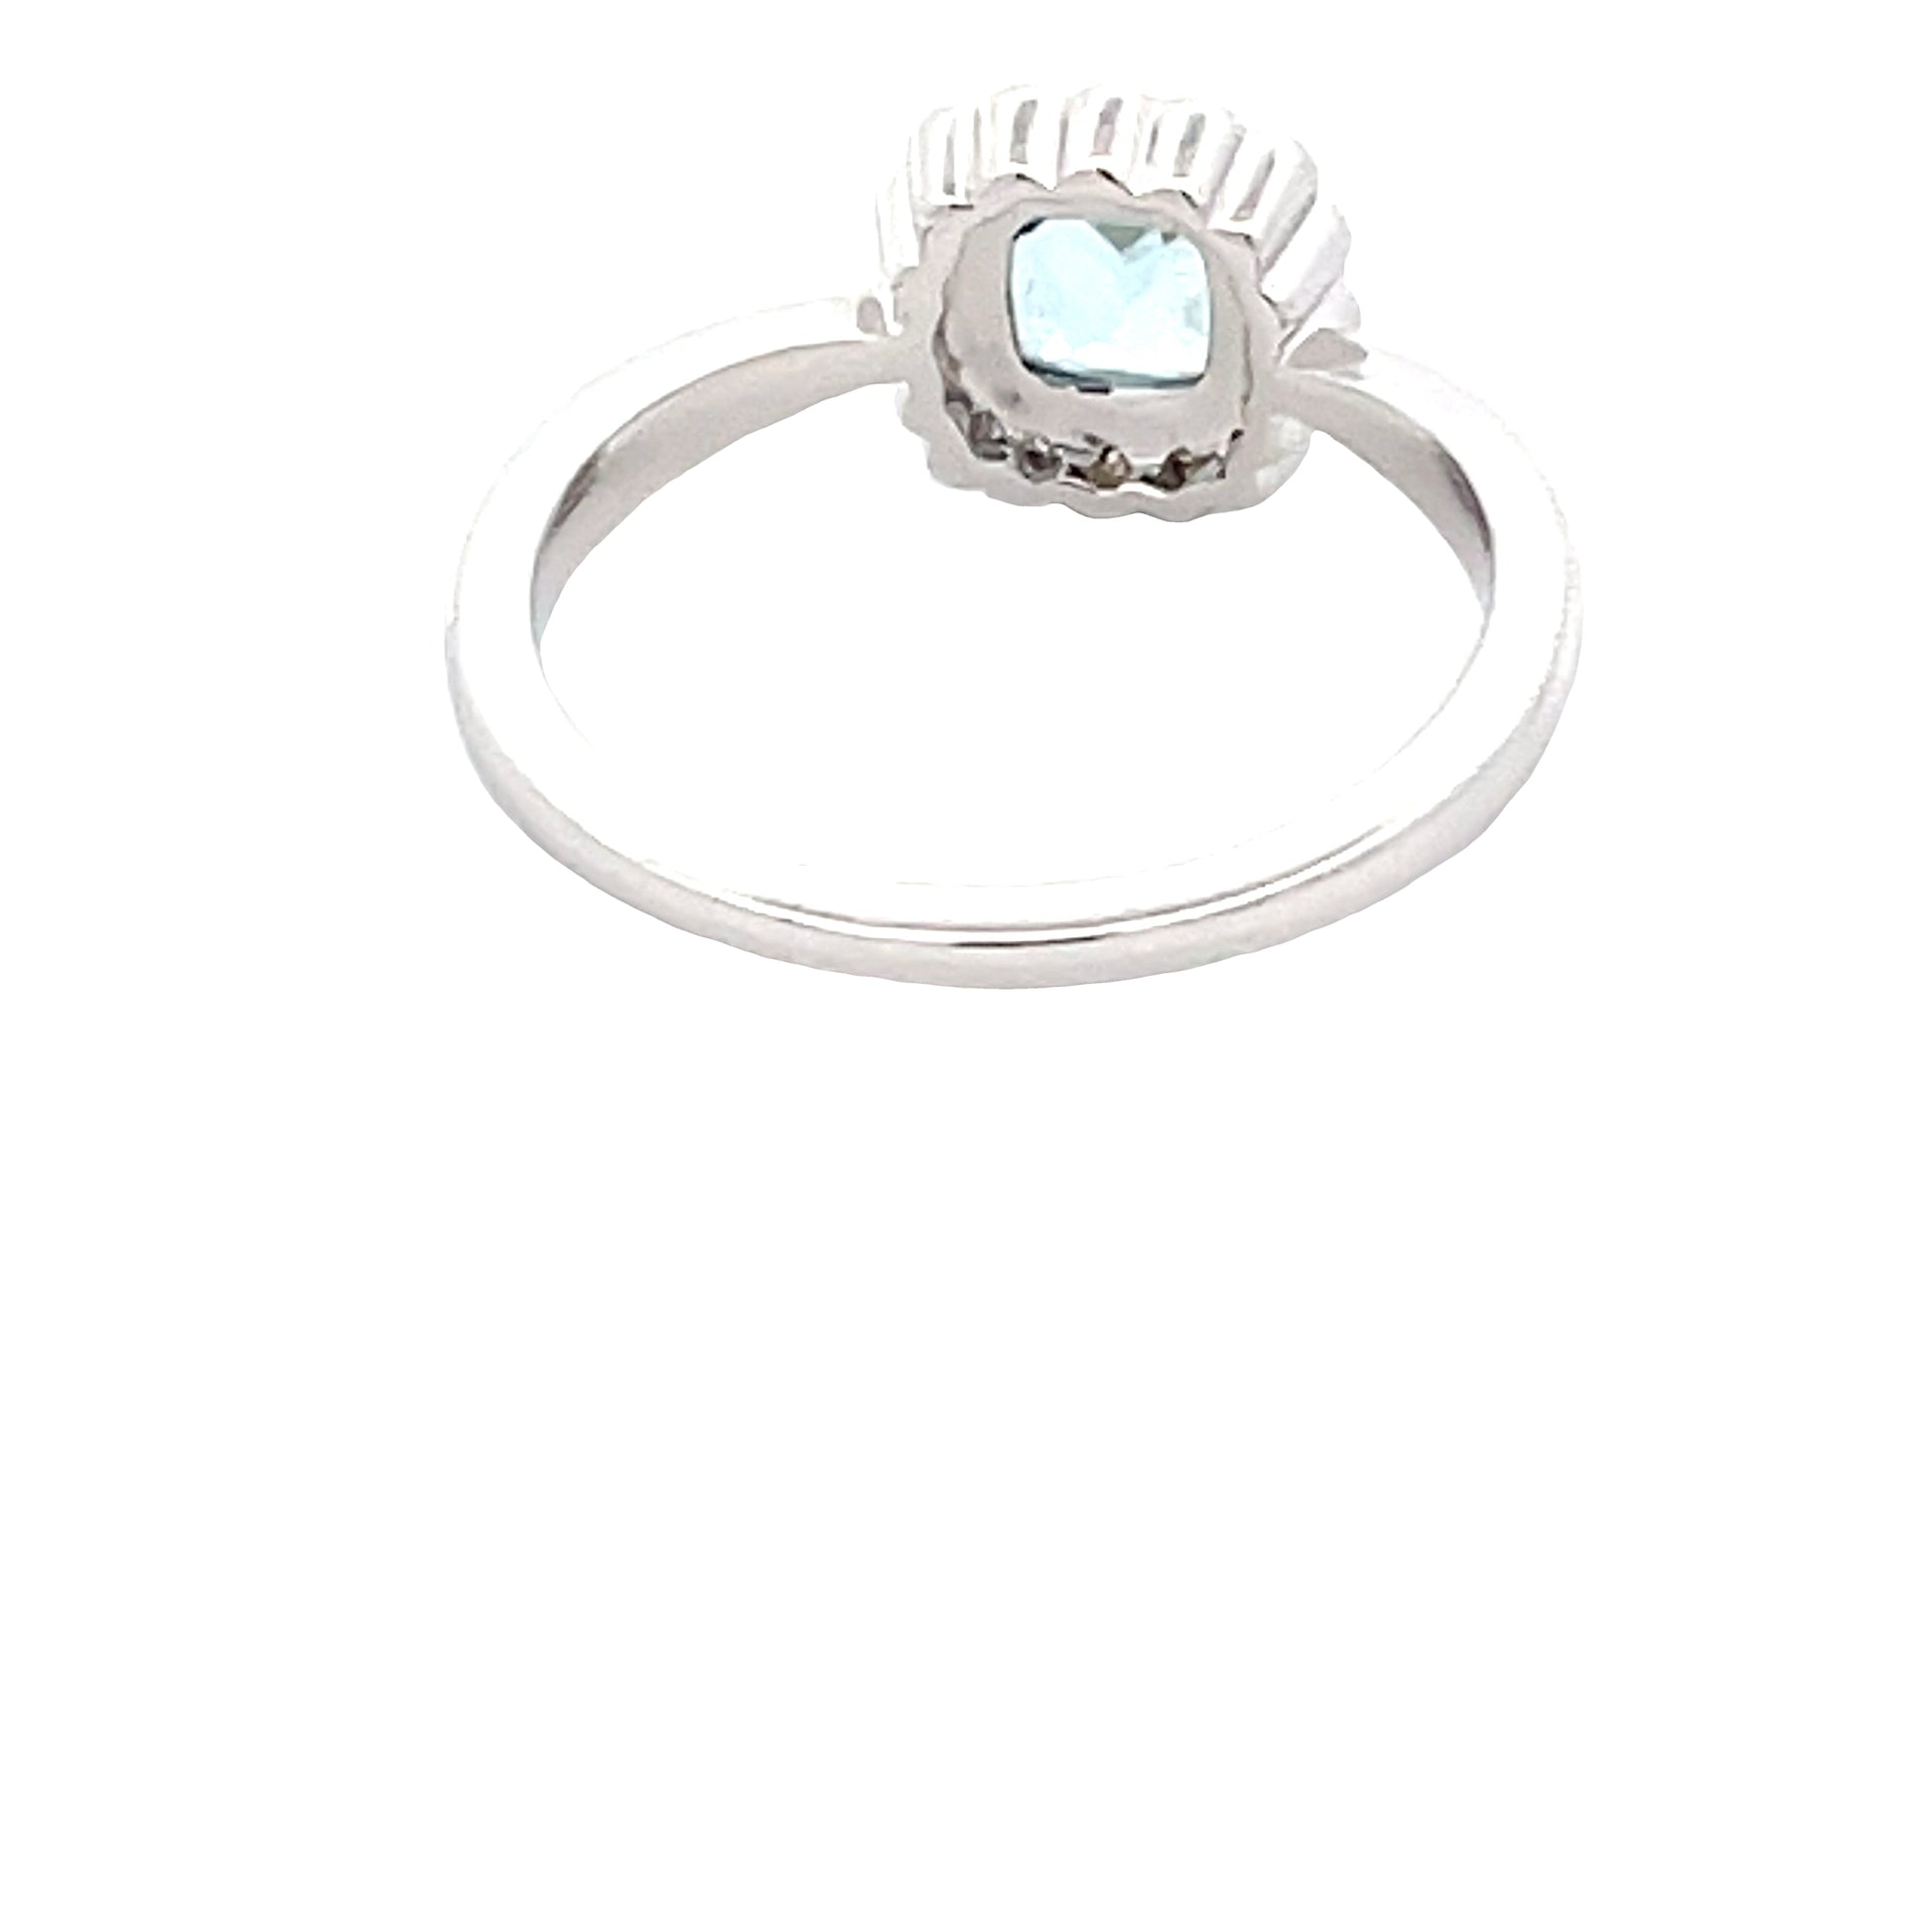 Aquamarine and round brilliant cut diamond vintage style dress ring  Gardiner Brothers   